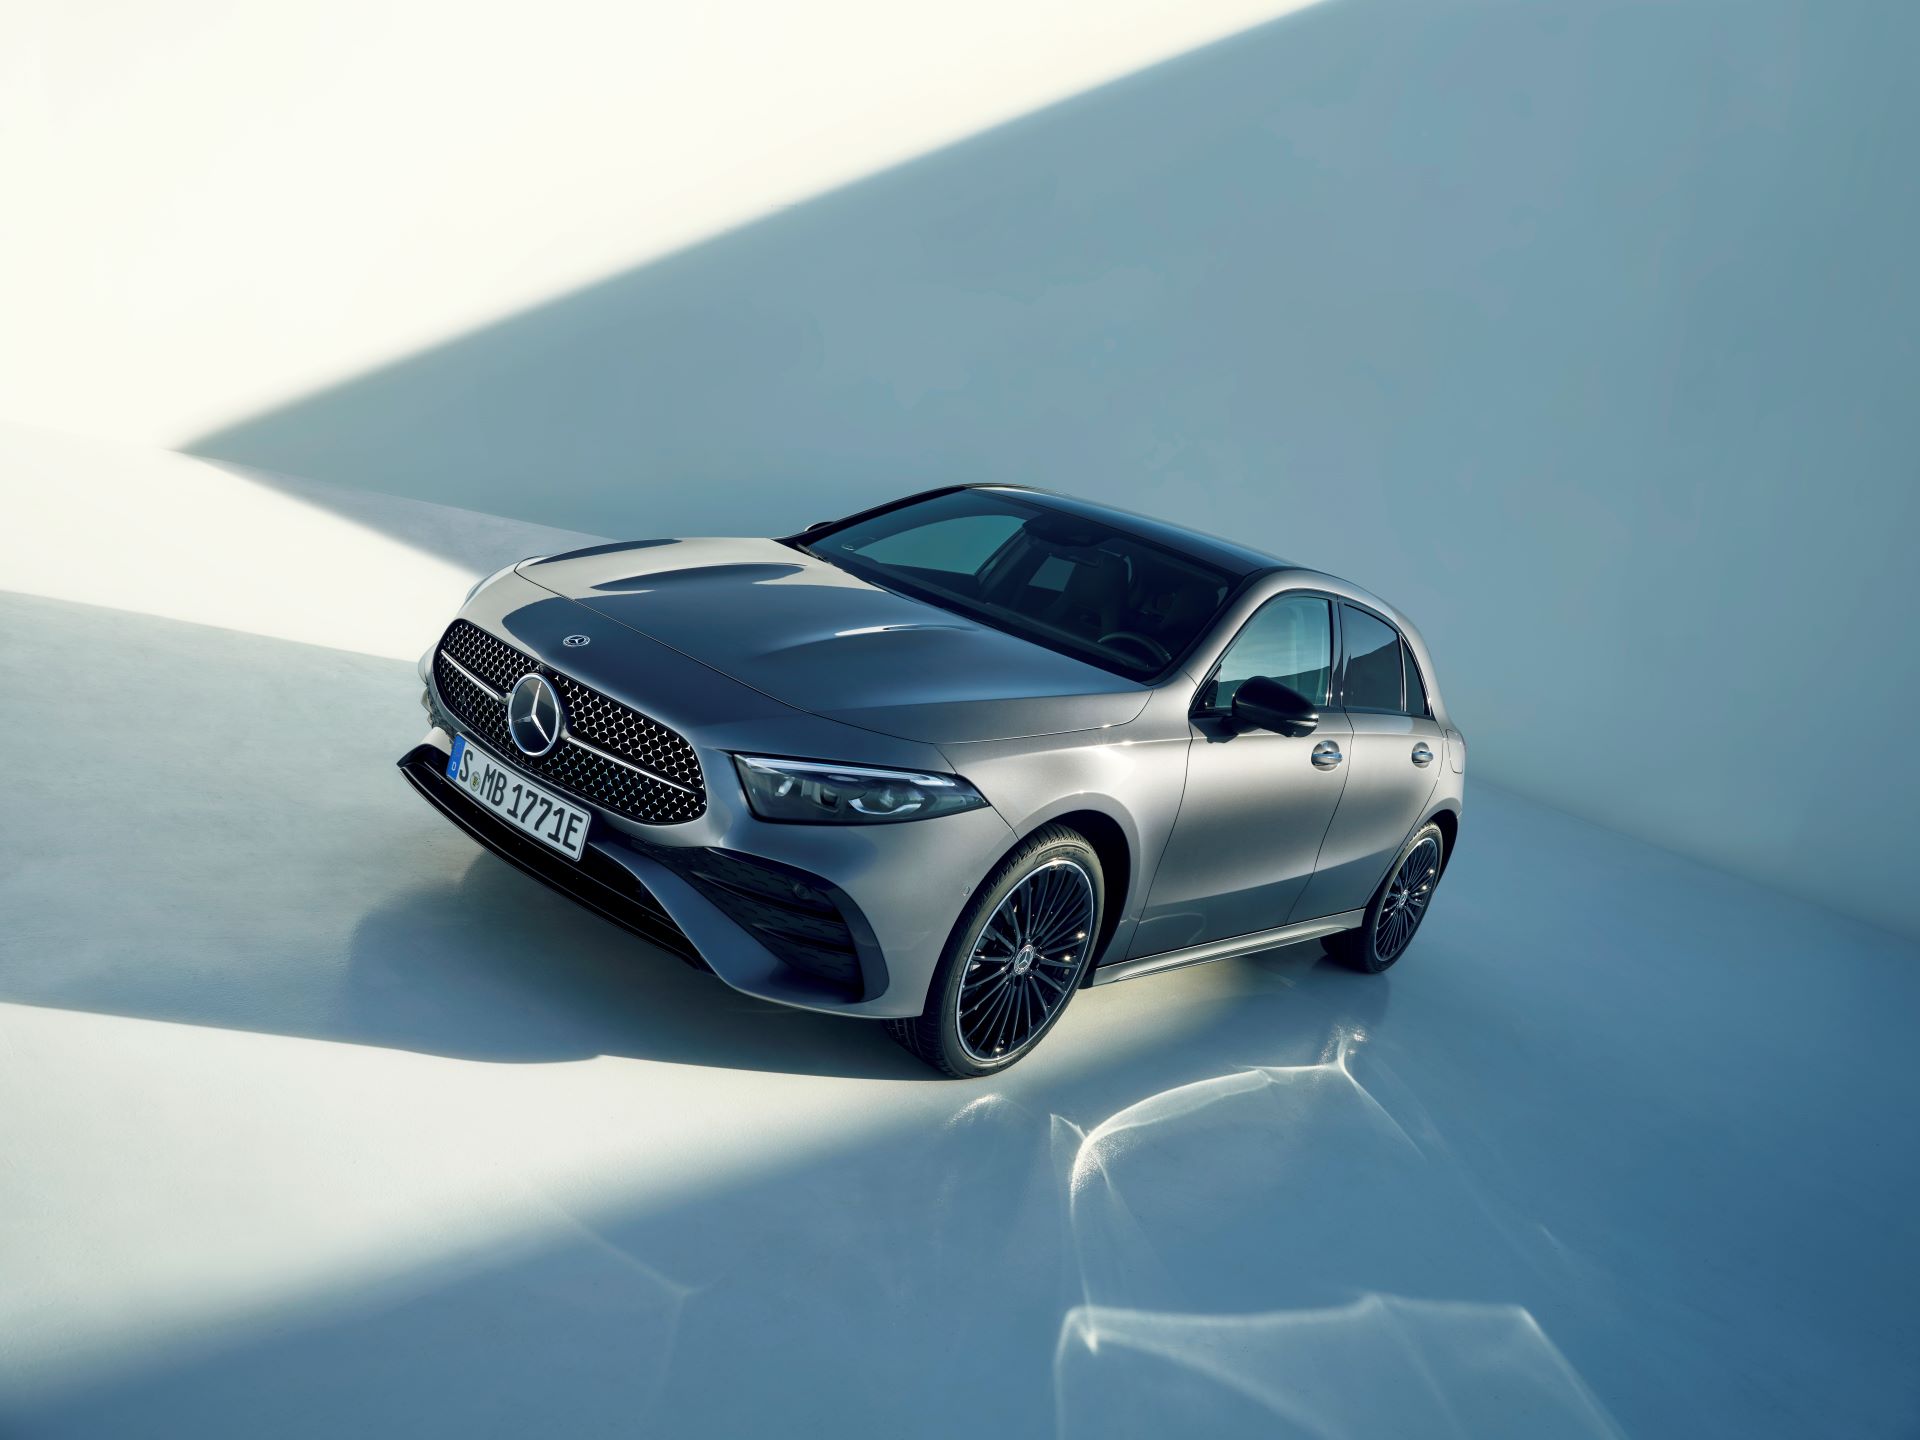 Mercedes-Benz A-Class now more attainable through Agility Finance